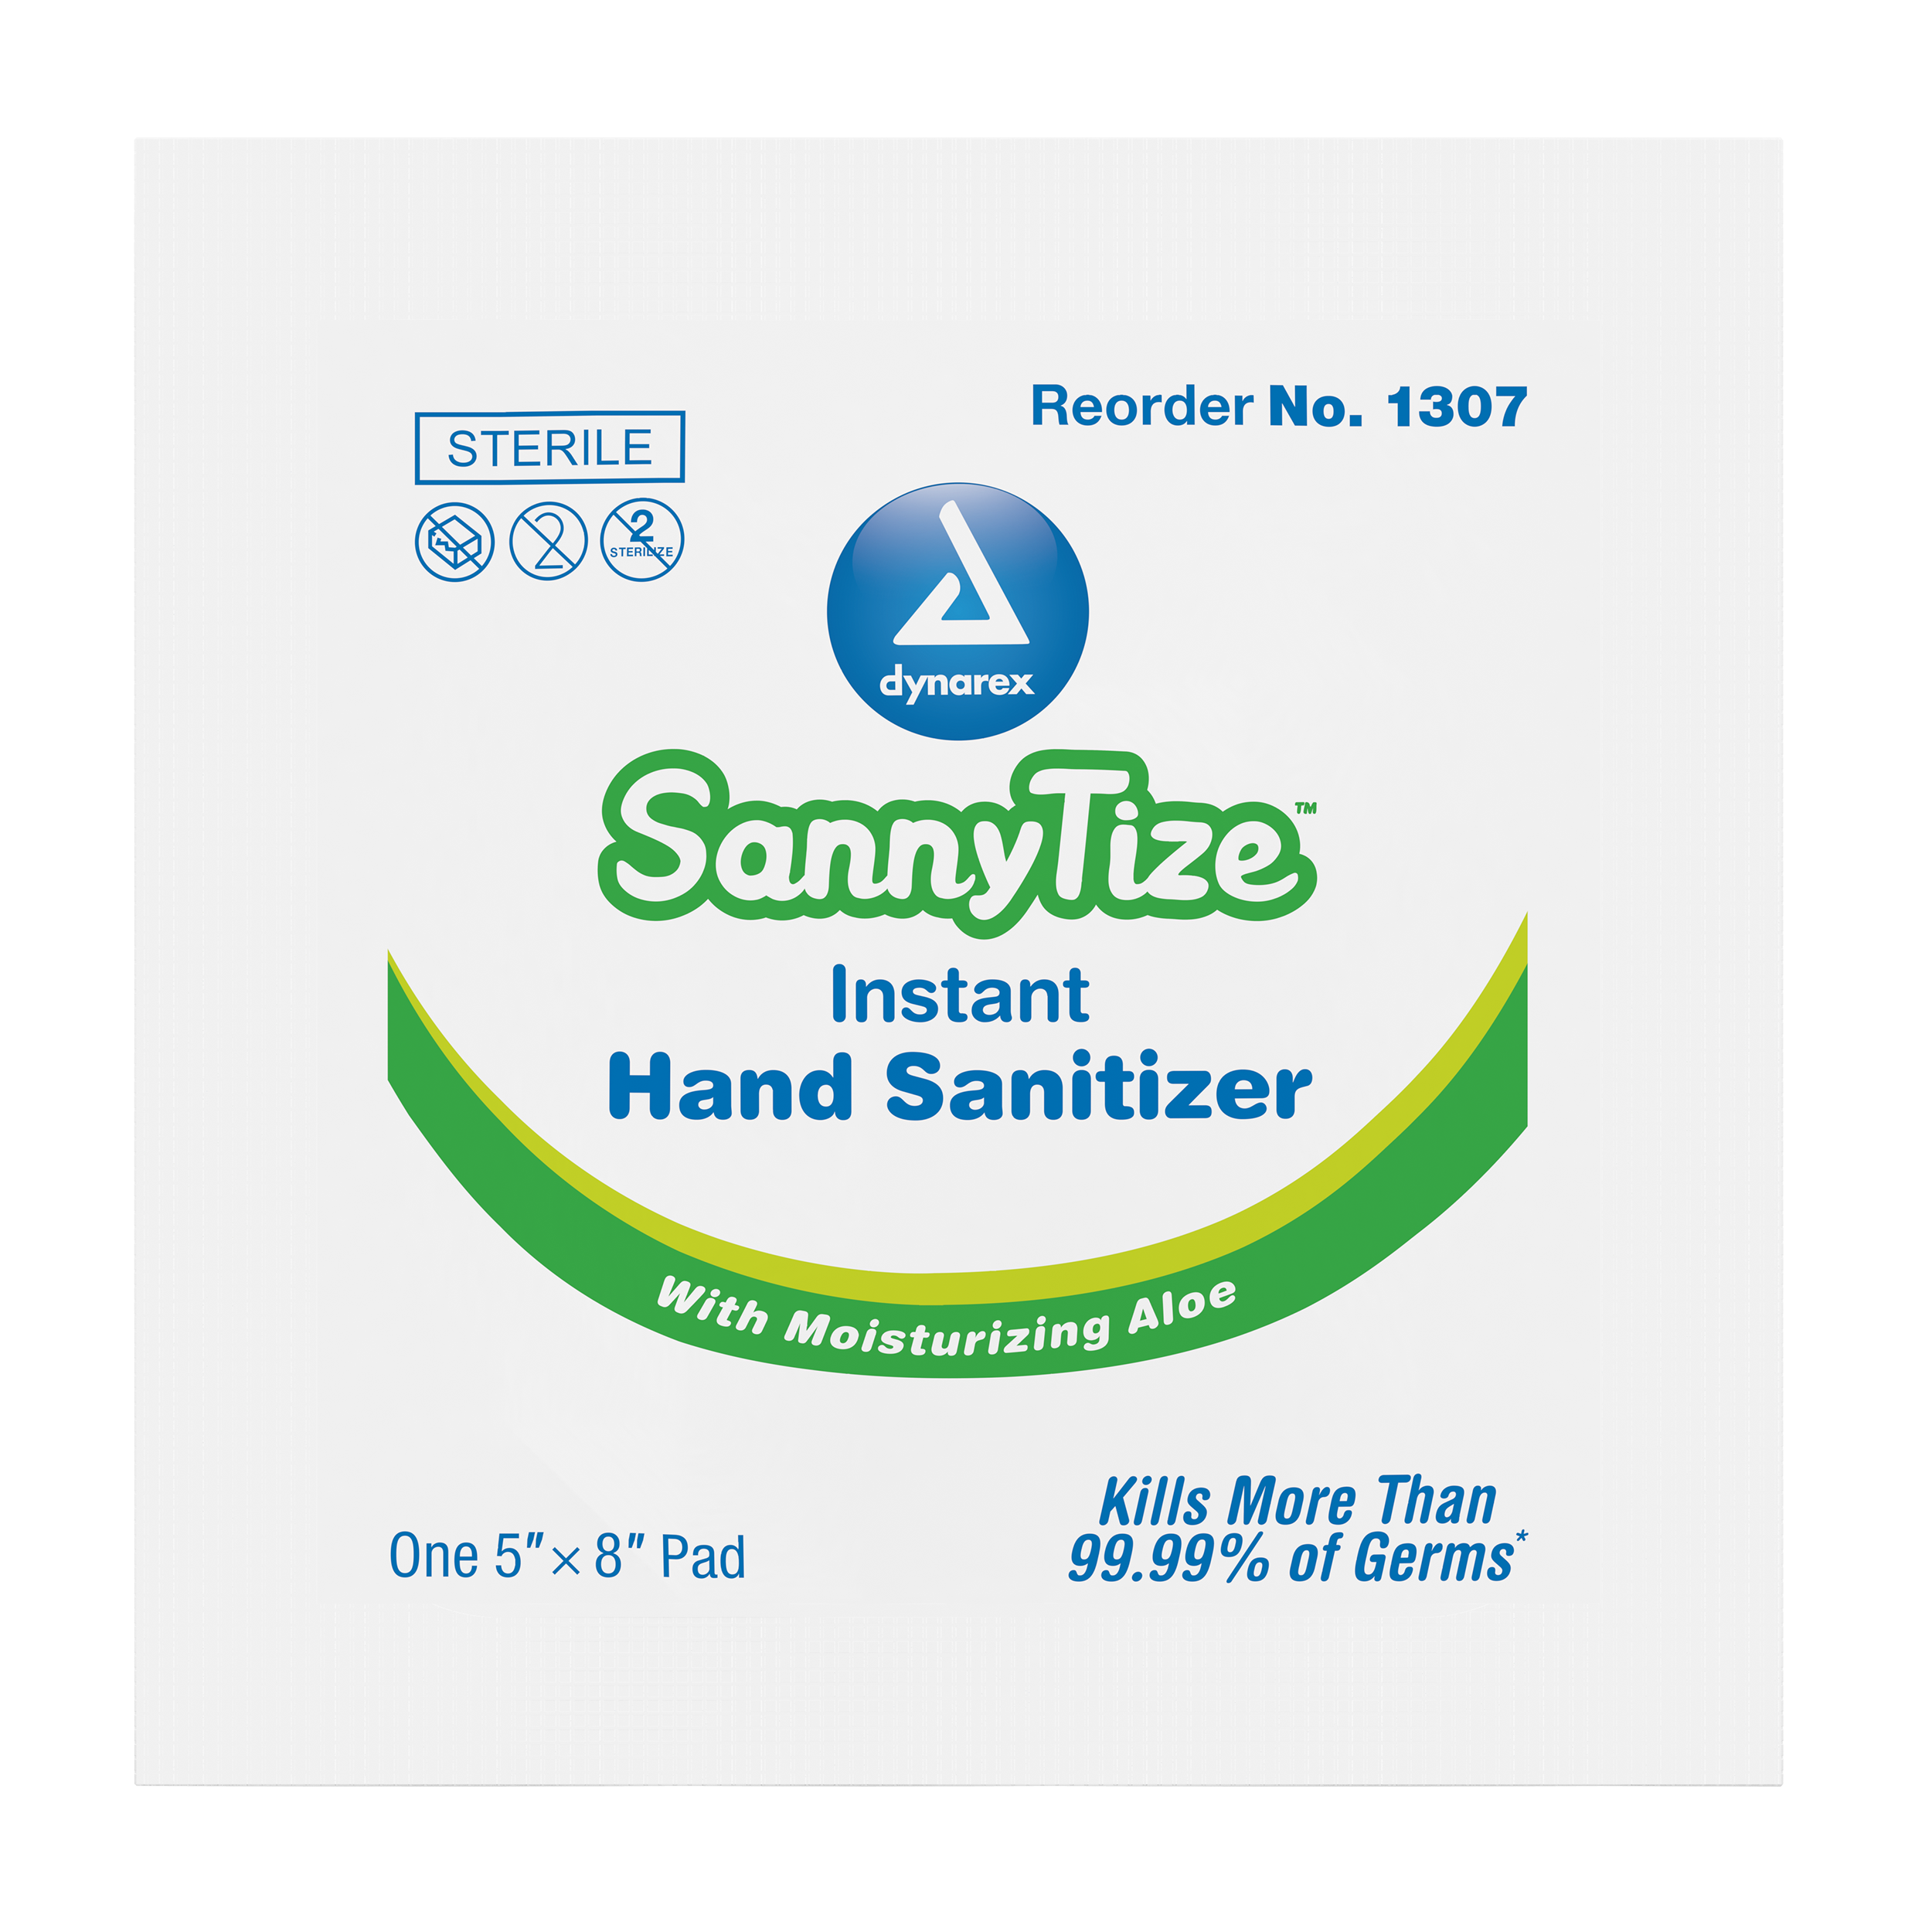 1307 Dynarex单独包装的Sannytize即时洗手液雨刷含有70%的酒精